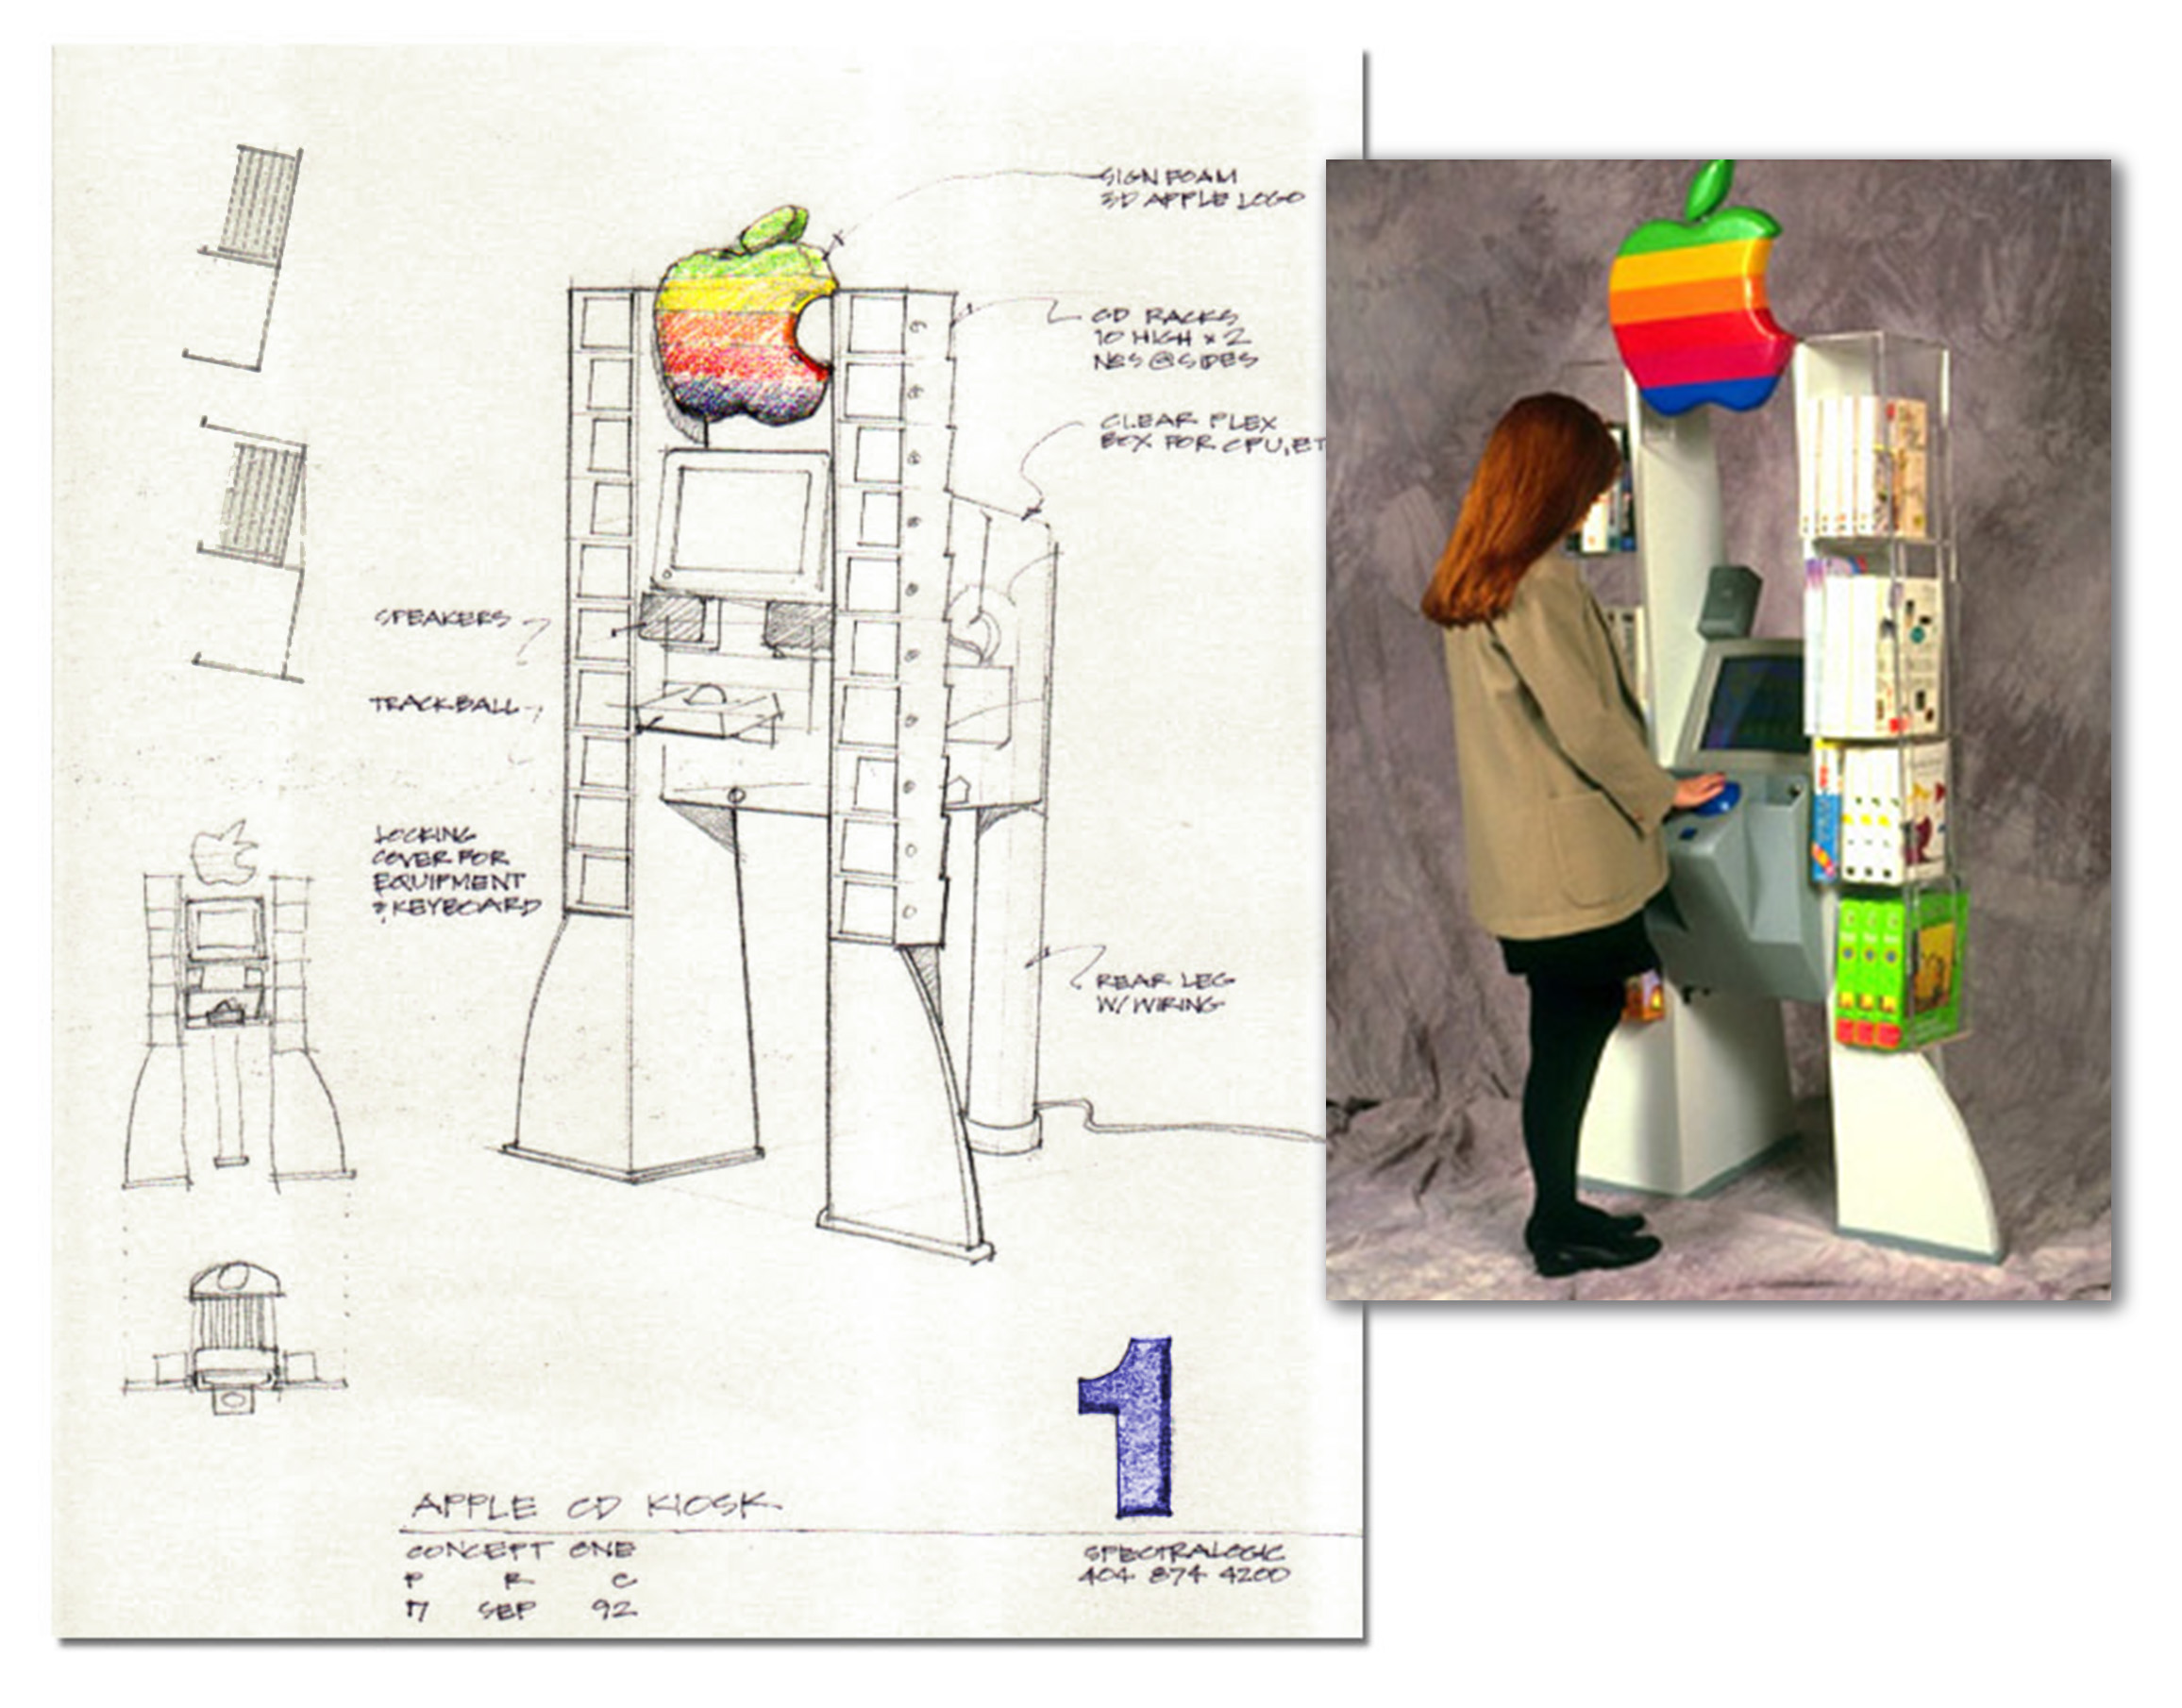 Apple kiosk sketch and prototype